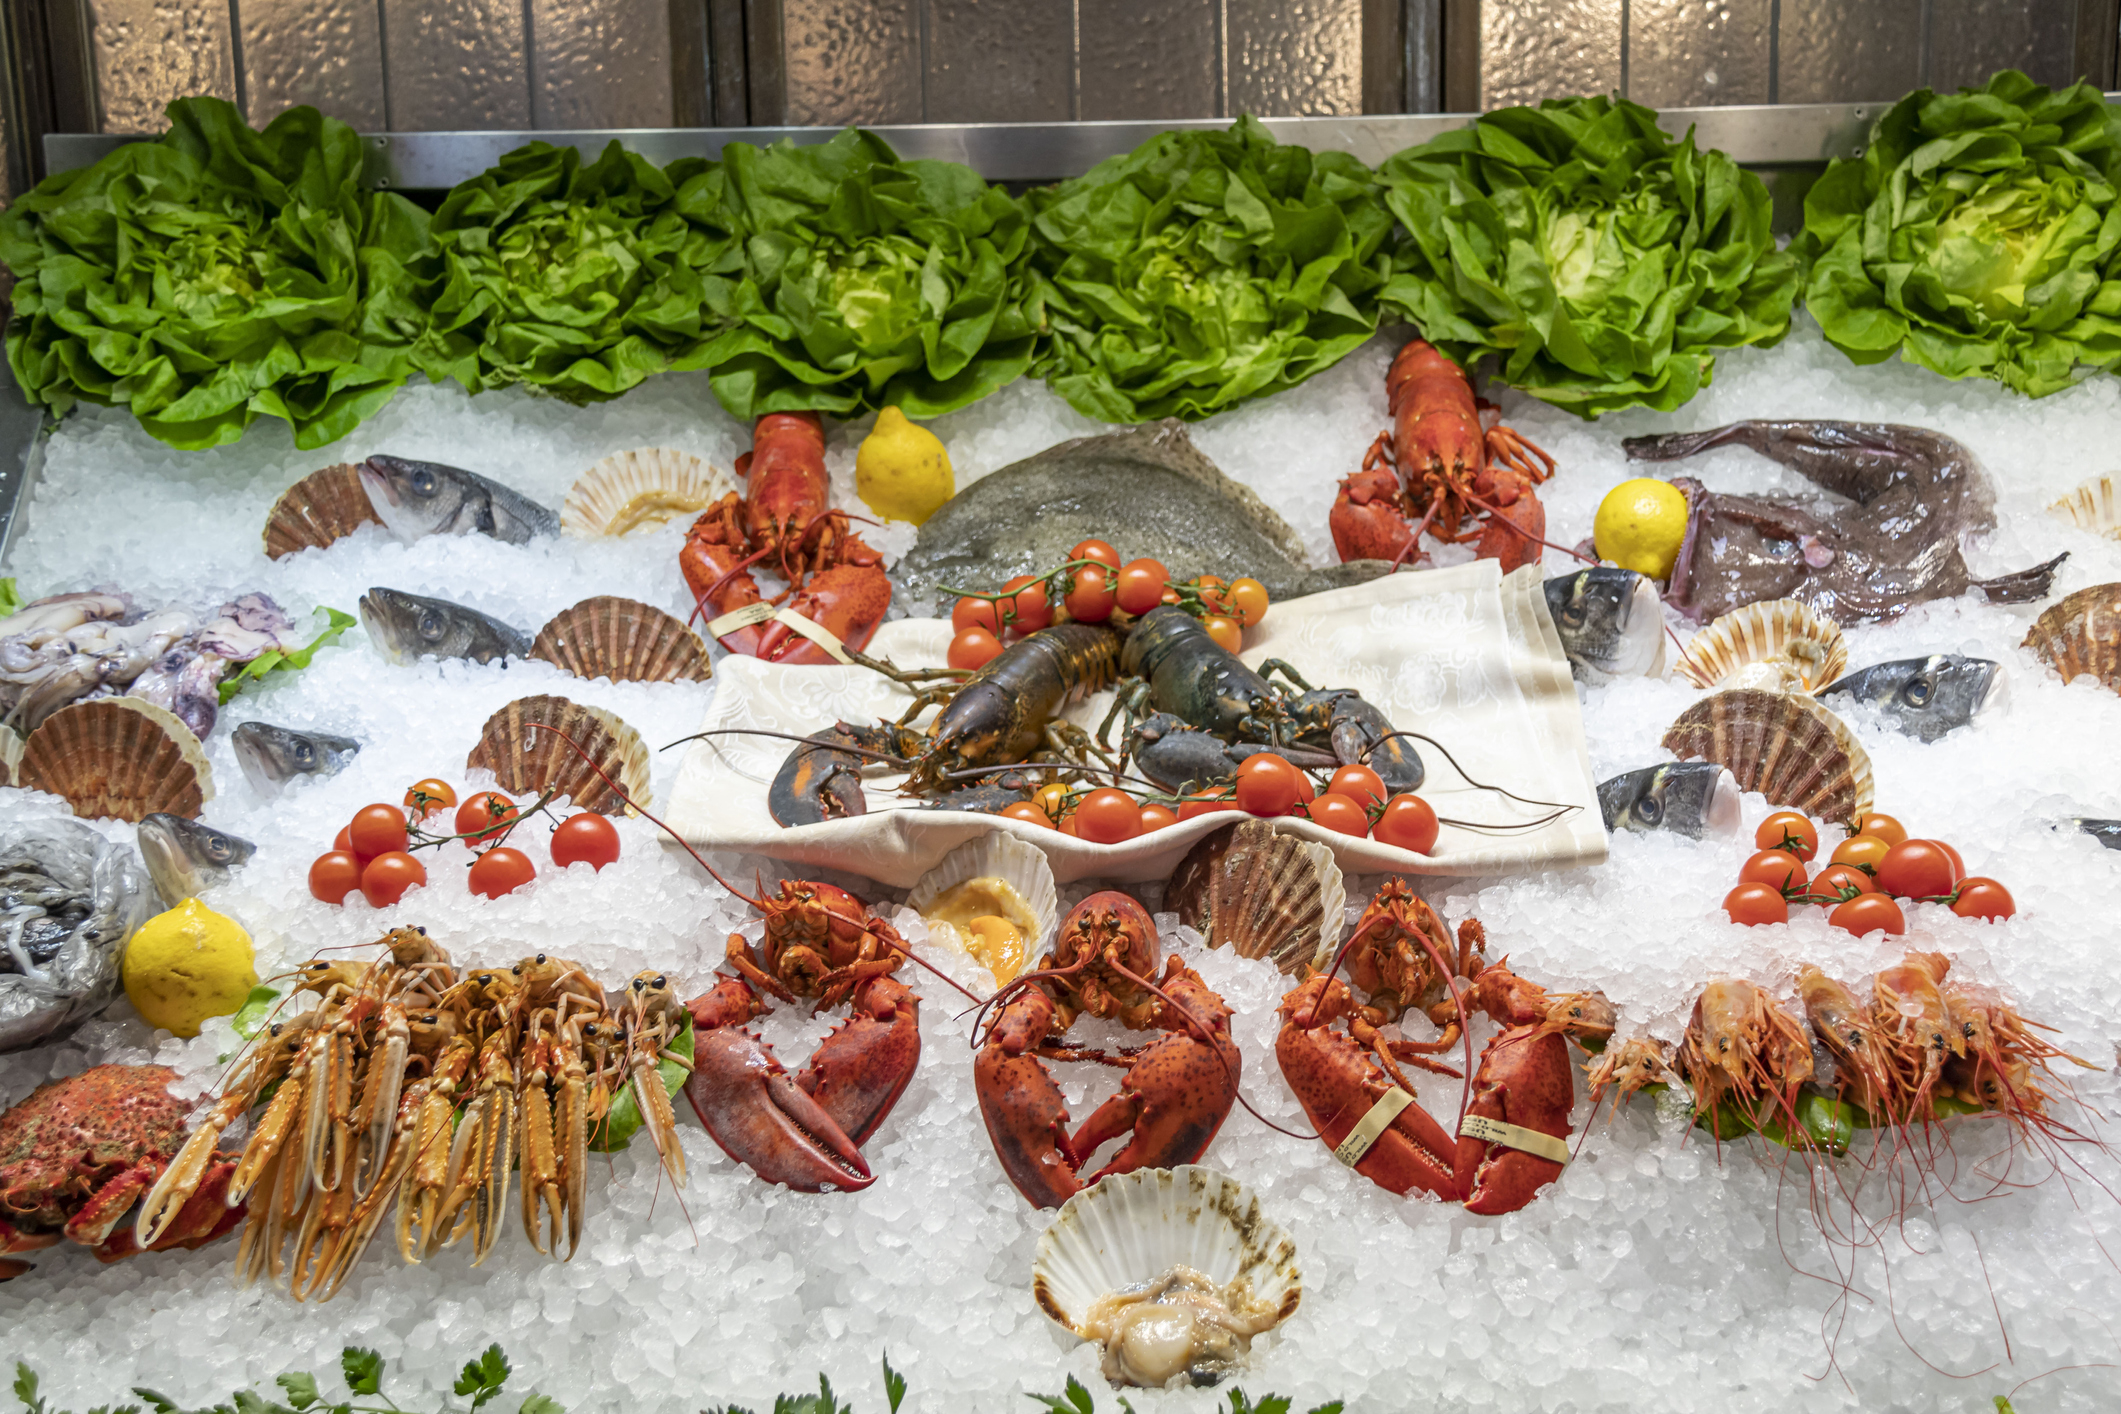 A seafood display